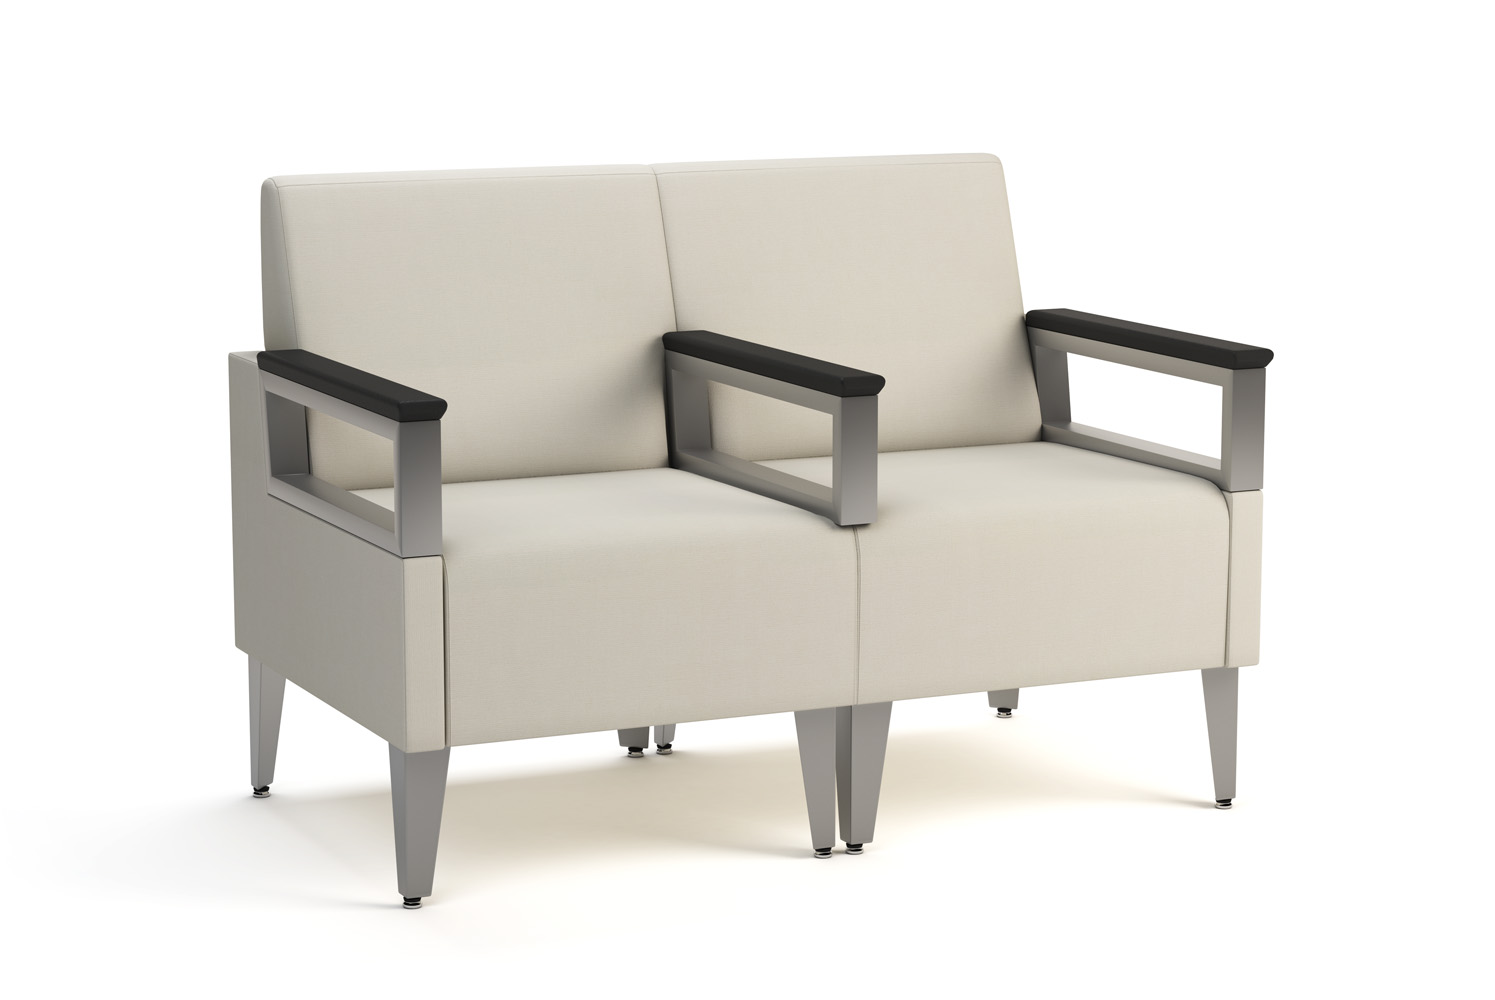 Malibu 2 Seat Lounge with Quad Arms